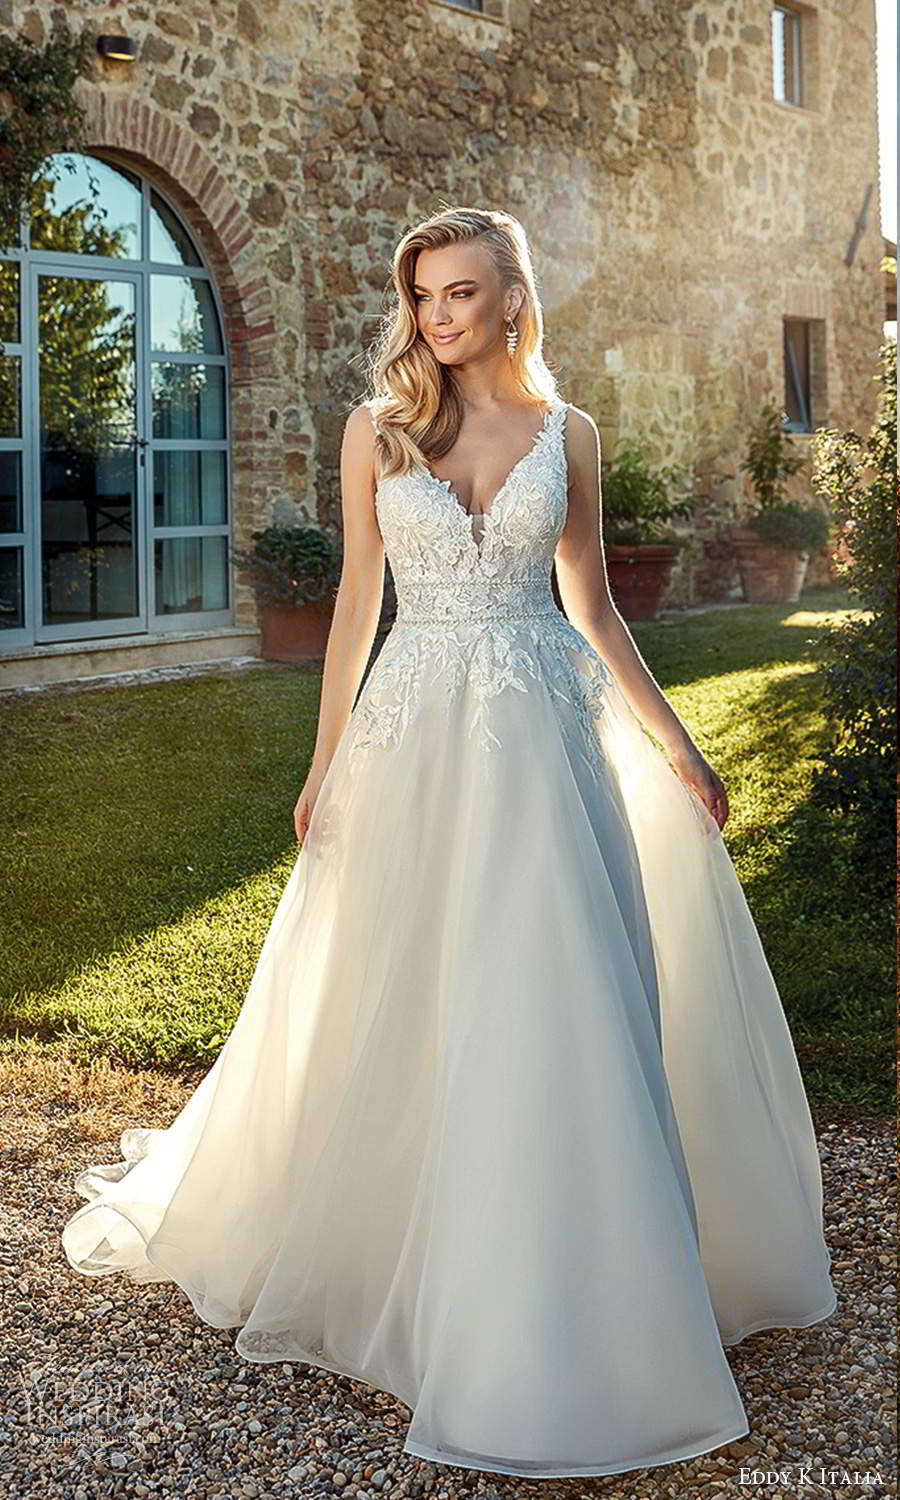 eddy k 2021 italia bridal sleeeless straps v neckline embellished bodice a line ball gown wedding dress chapel train (25) mv